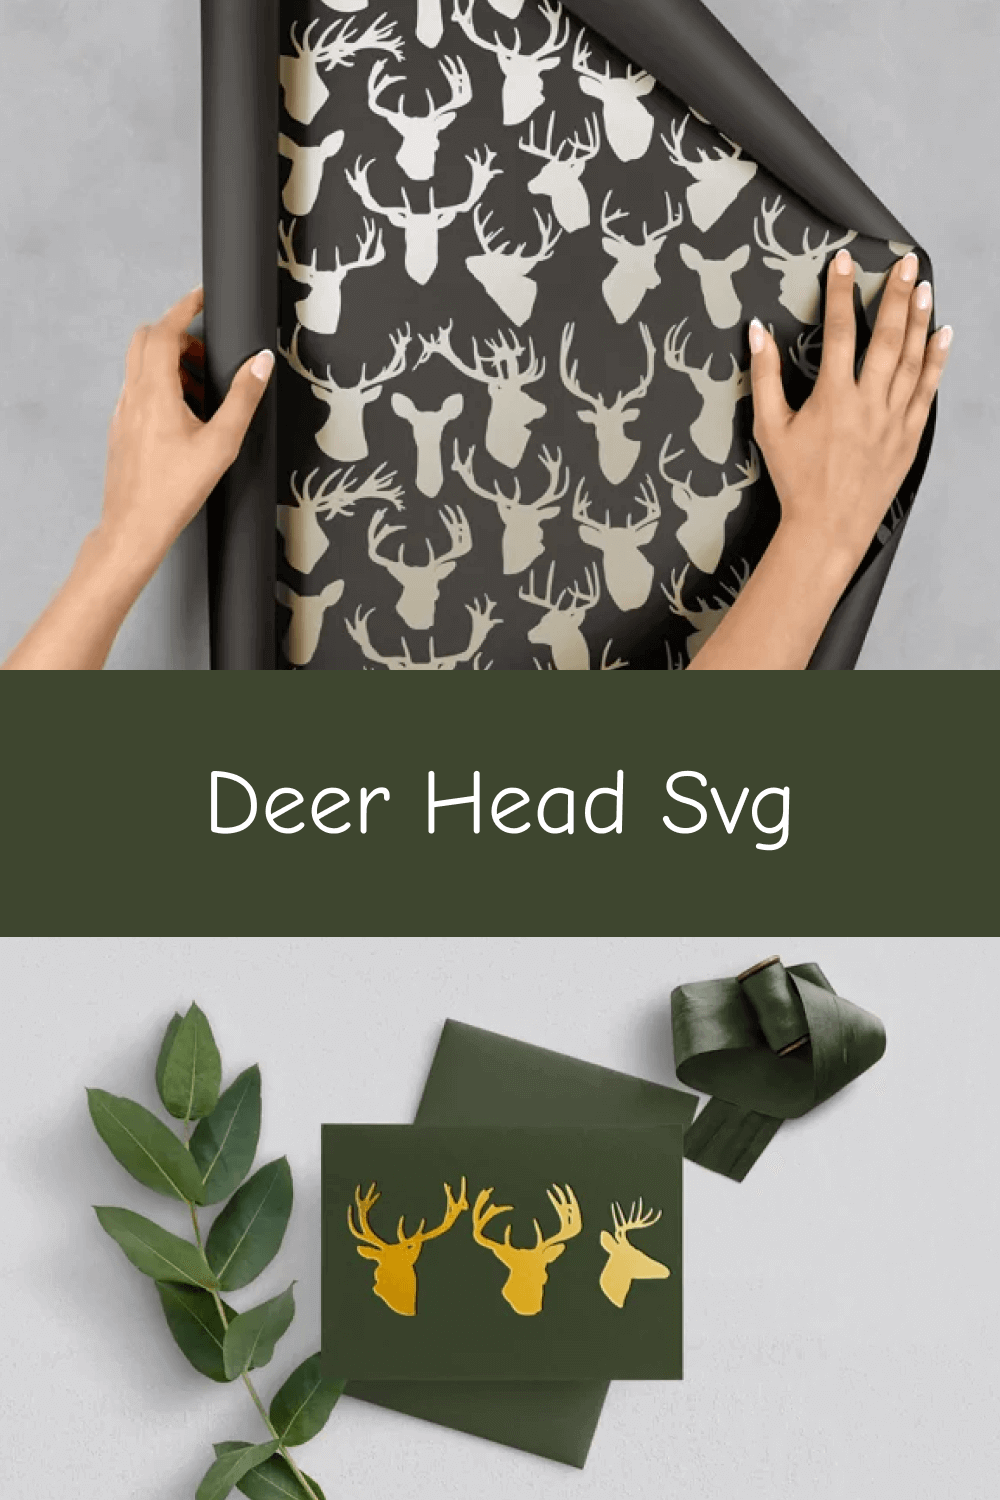 Deer Head SVG on Green Background.